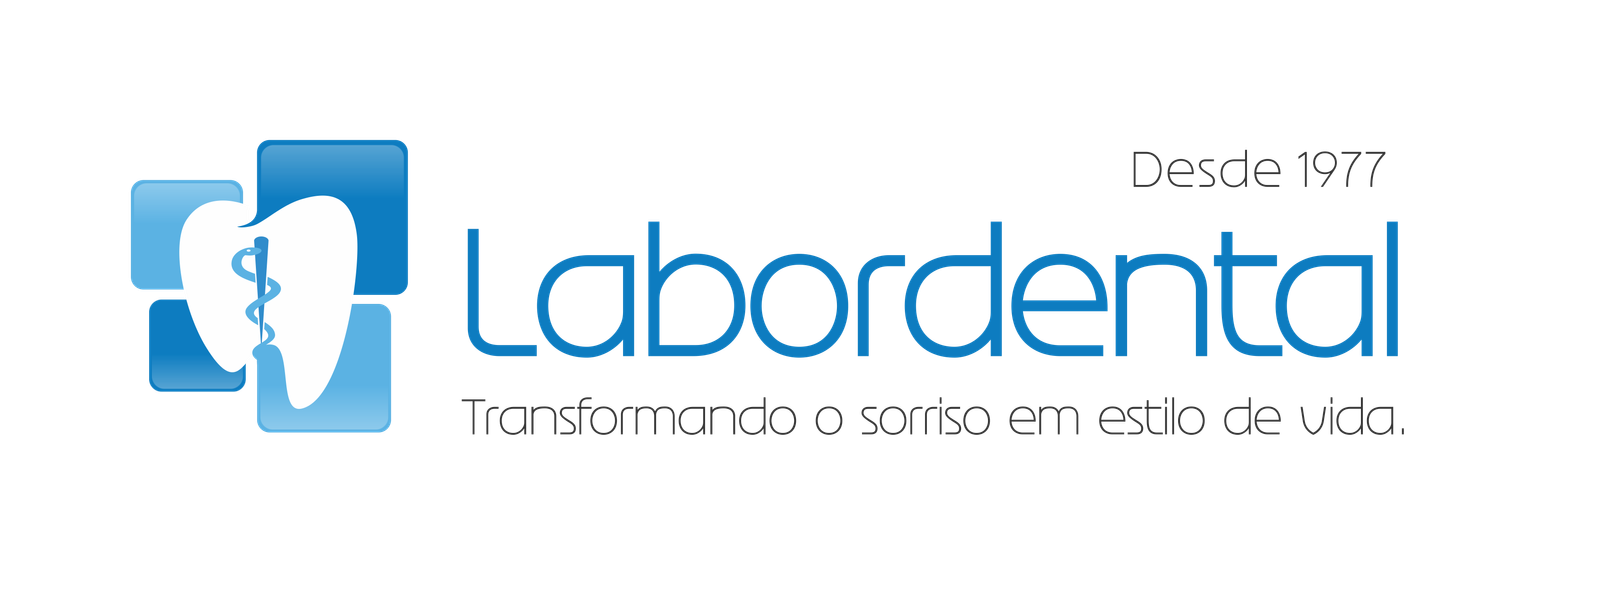 Nova Logo Labordental Vetorizada (horizontal)